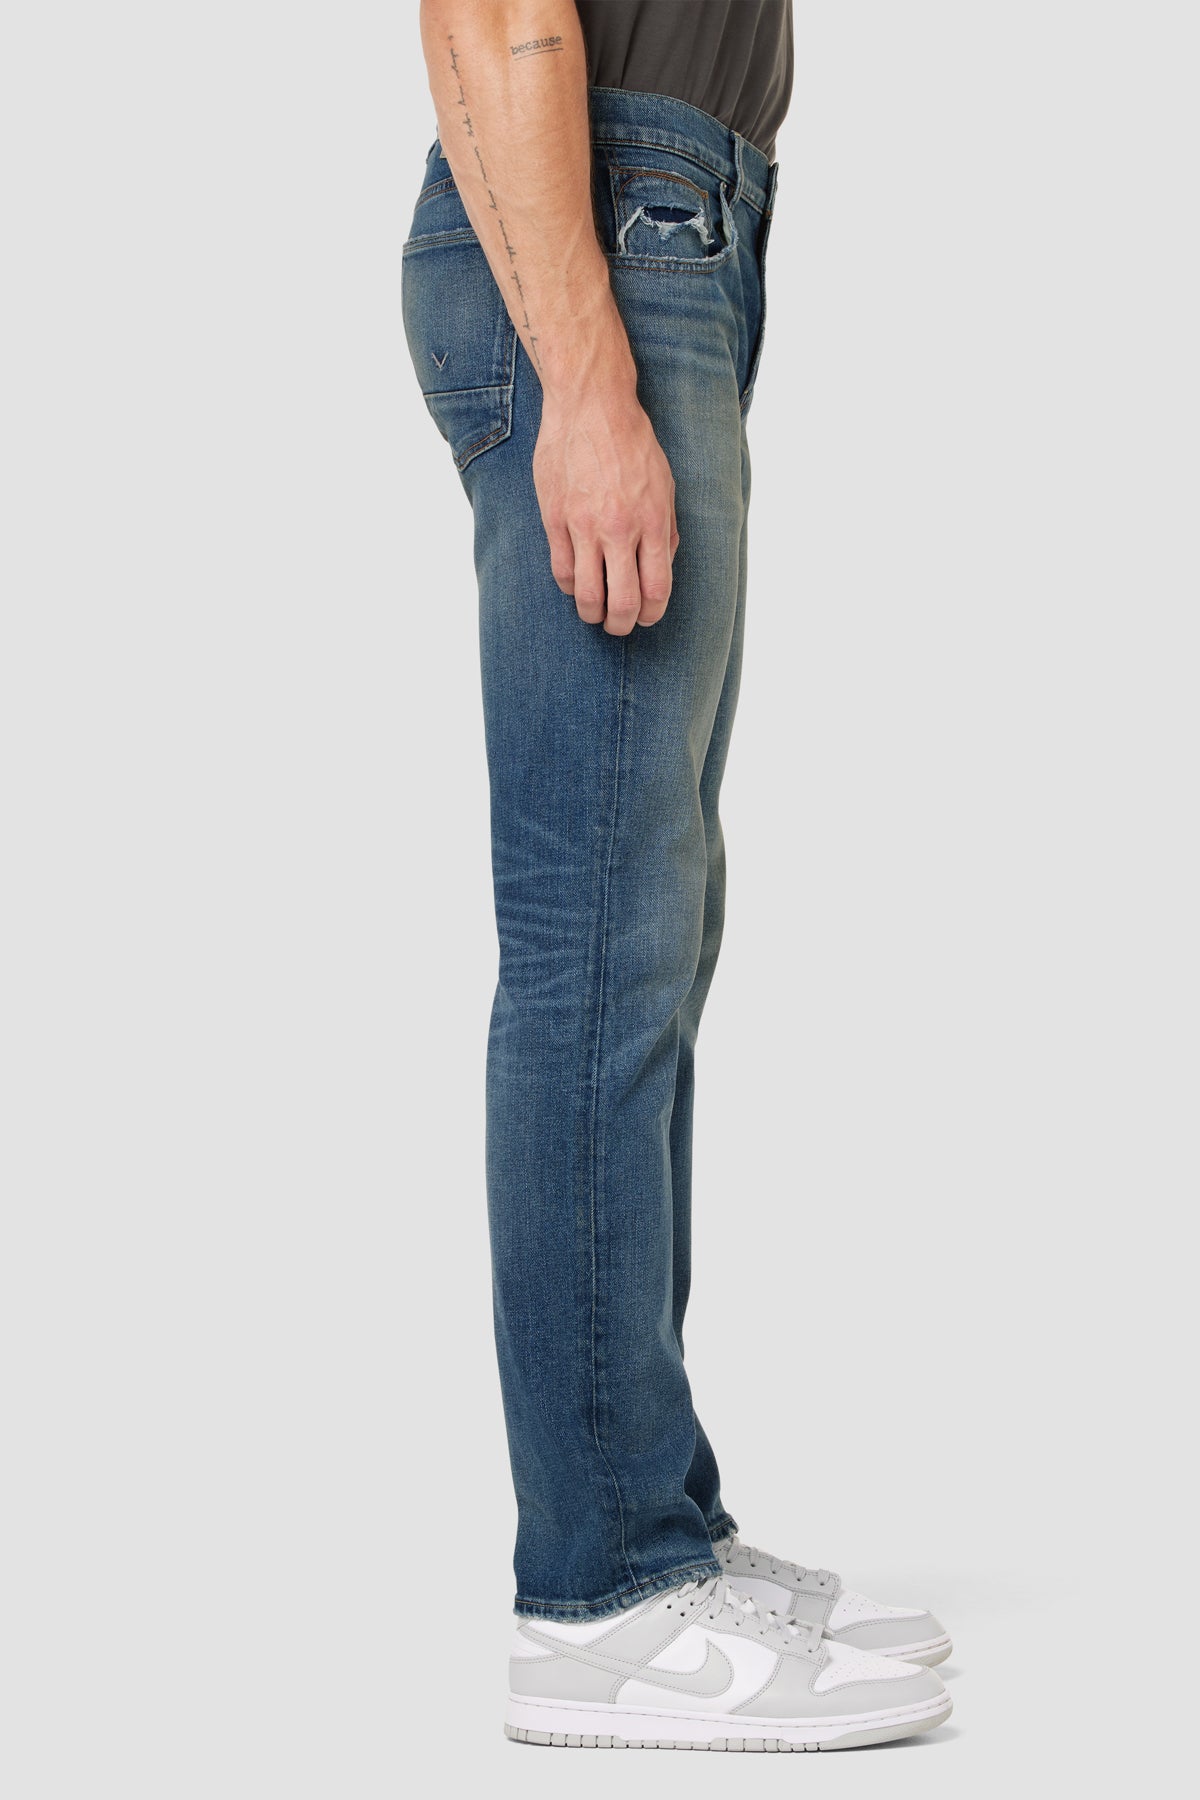 Blake Slim Straight Jean Fabric | Italian Premium Hudson Jeans 